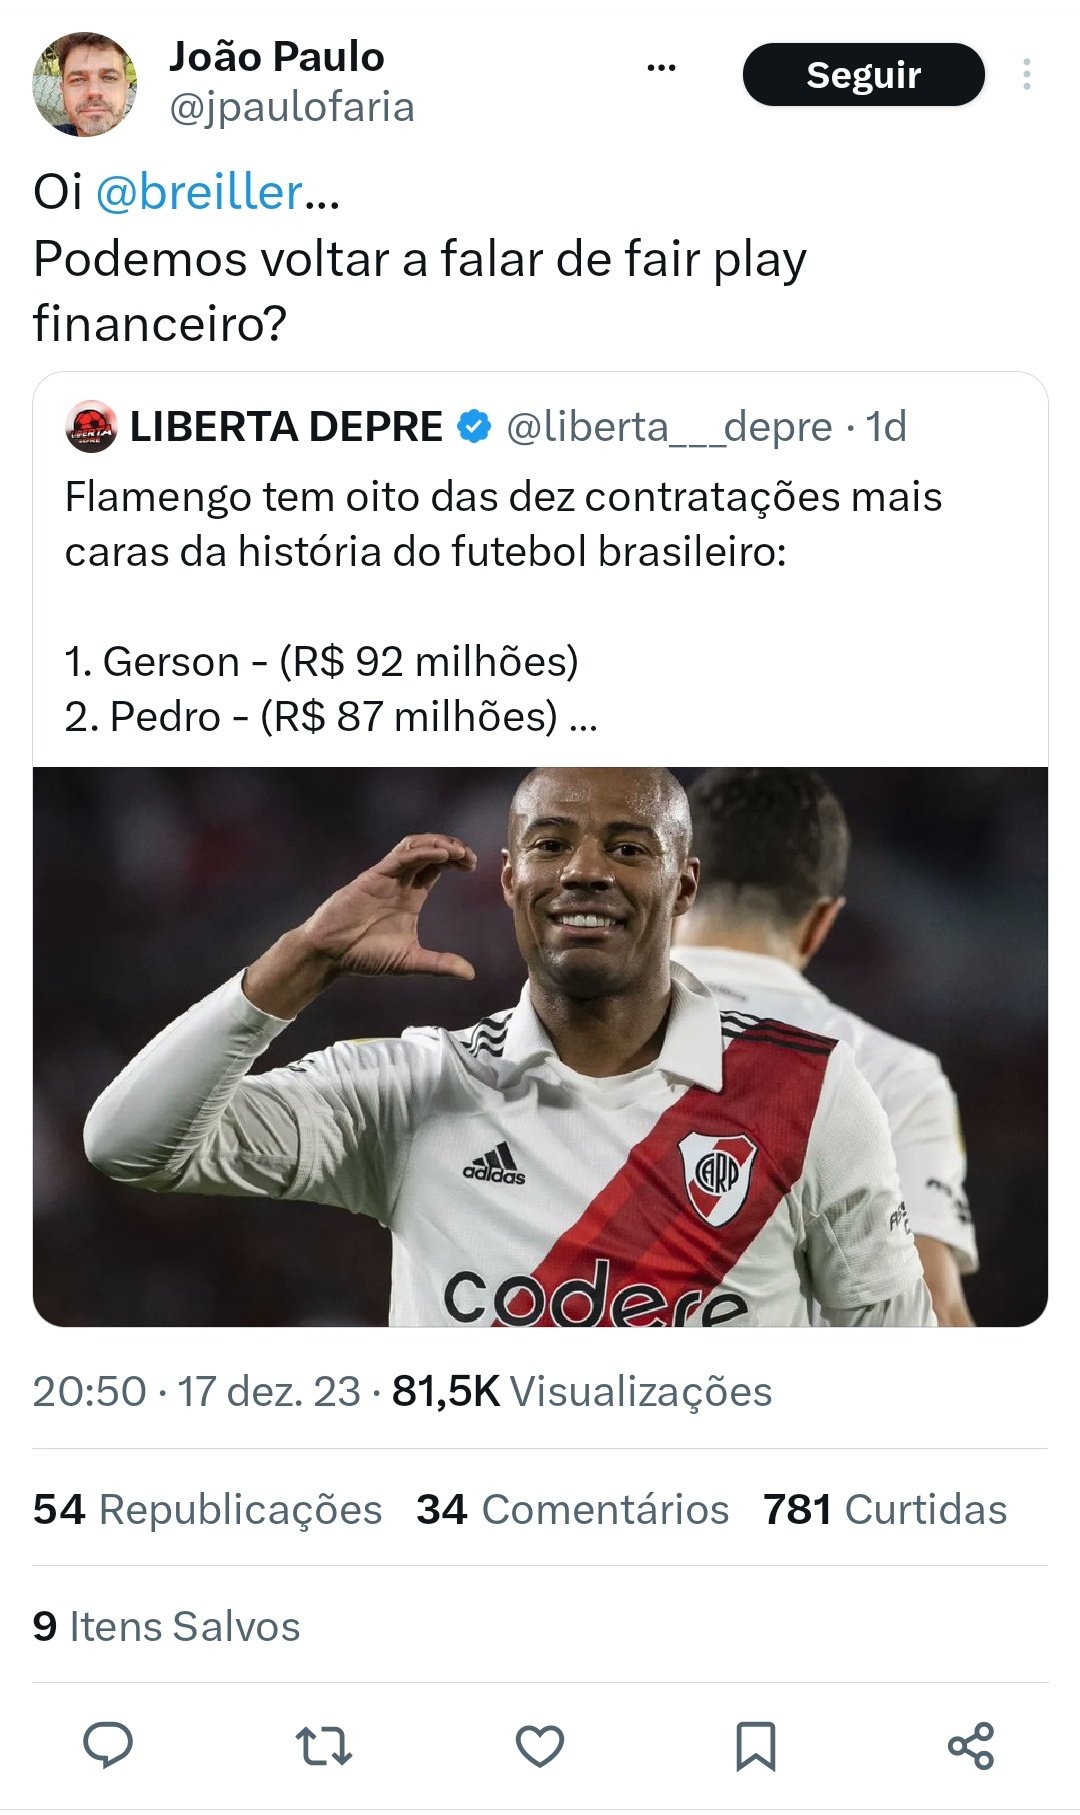 RECIBO_CRF on X: Errado é o BRB Fonte: vozes #recibo #Flamengo